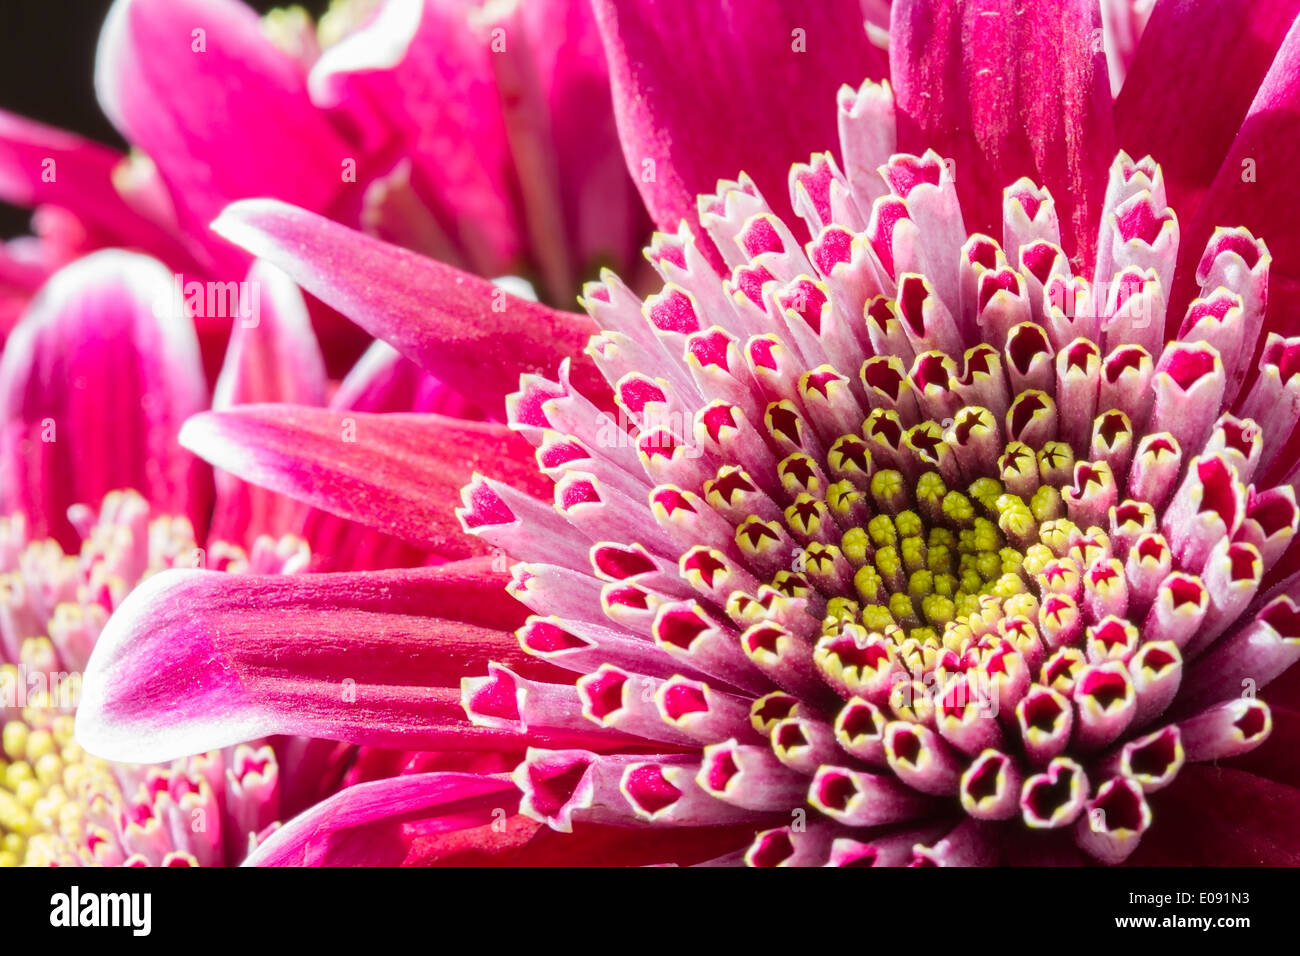 Close up image of dark pink chrysanthemum flowers Stock Photo